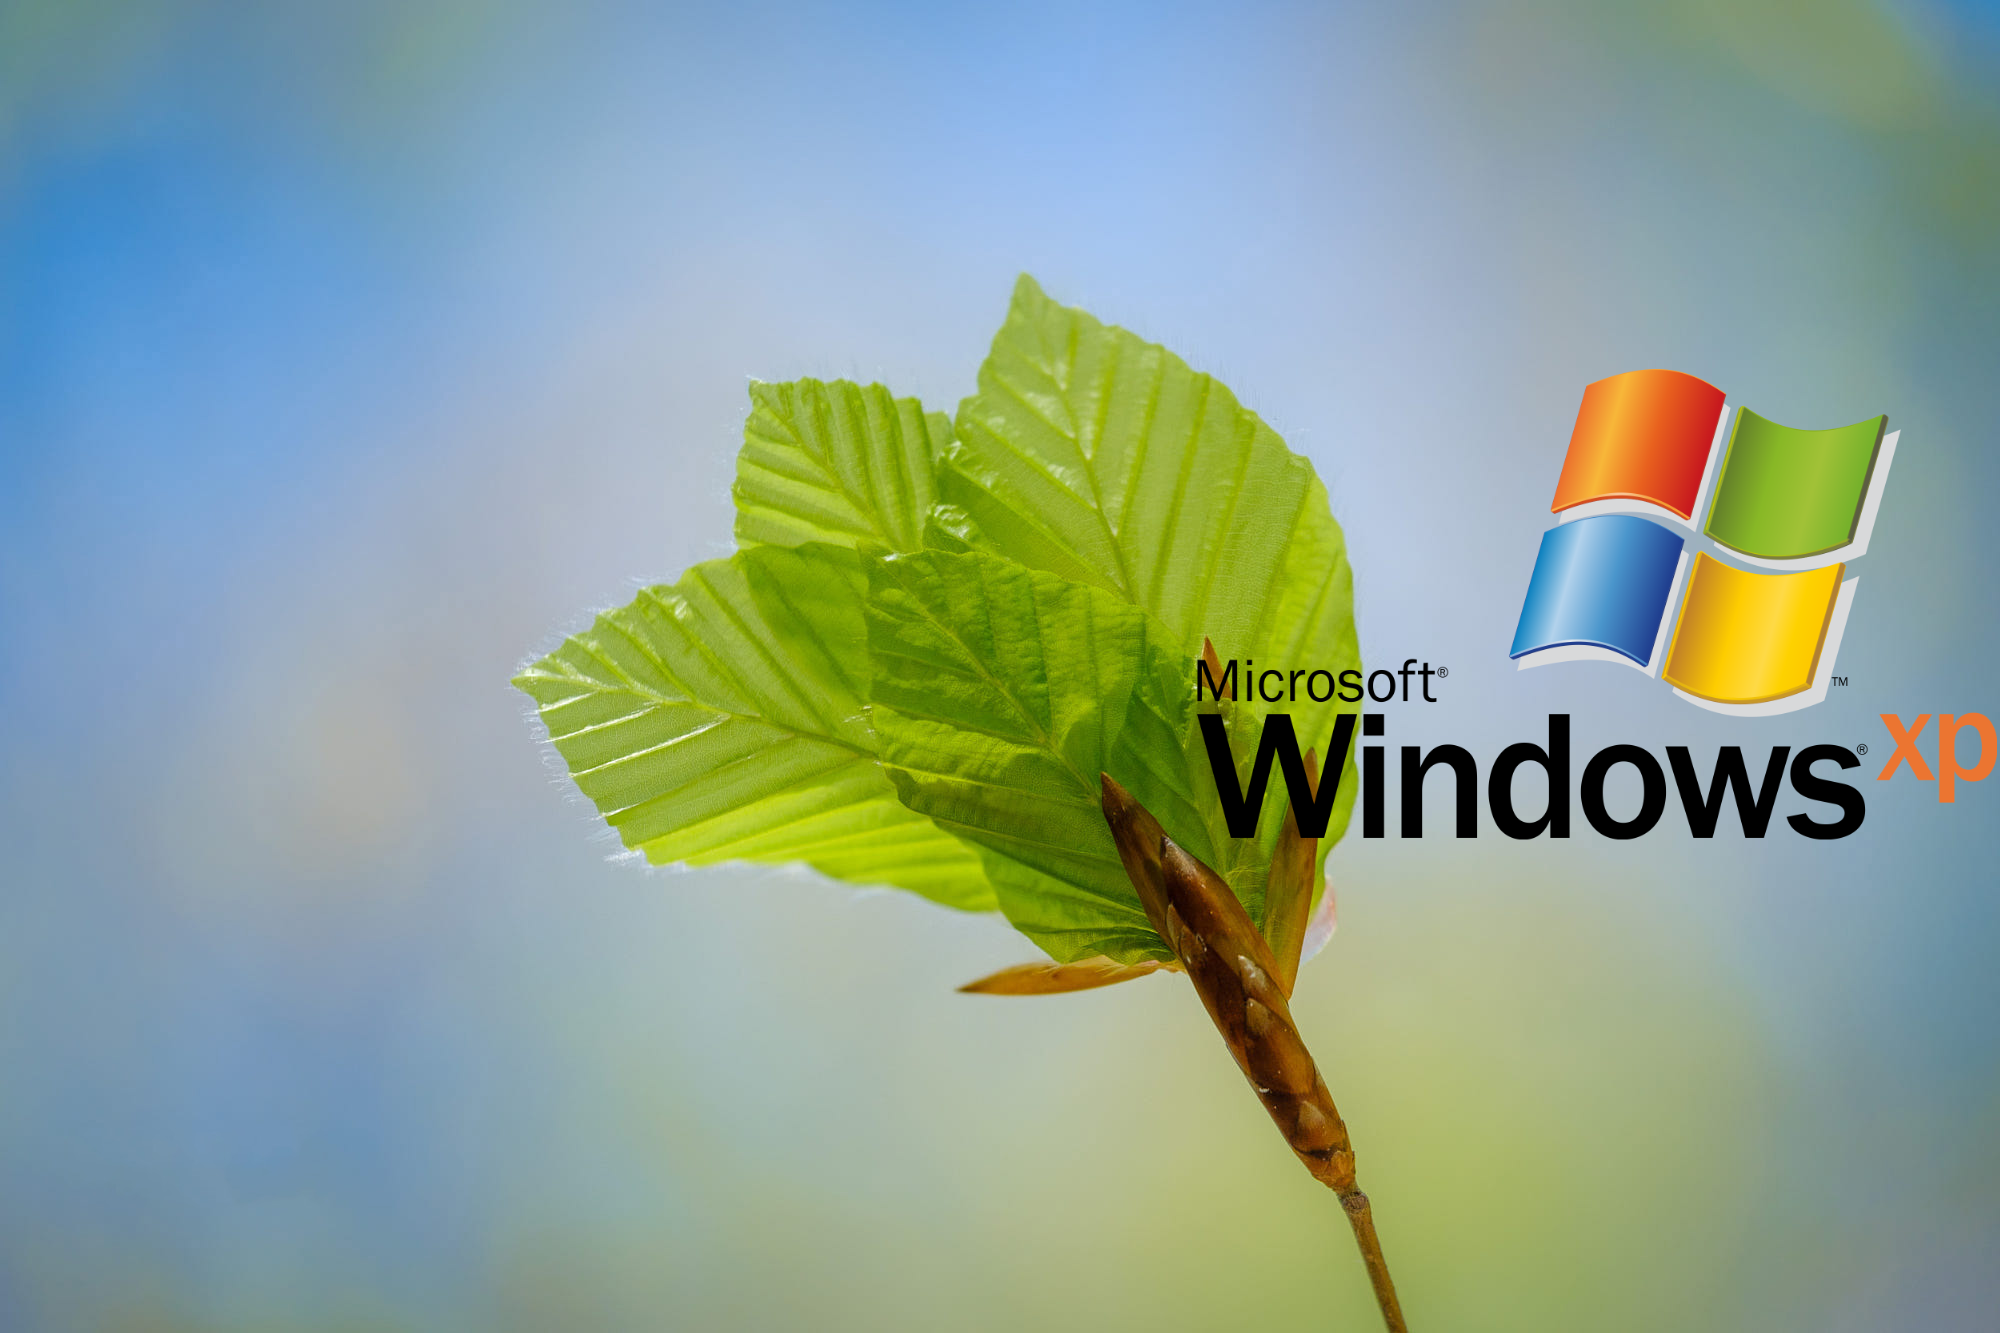 windows xp desktop background